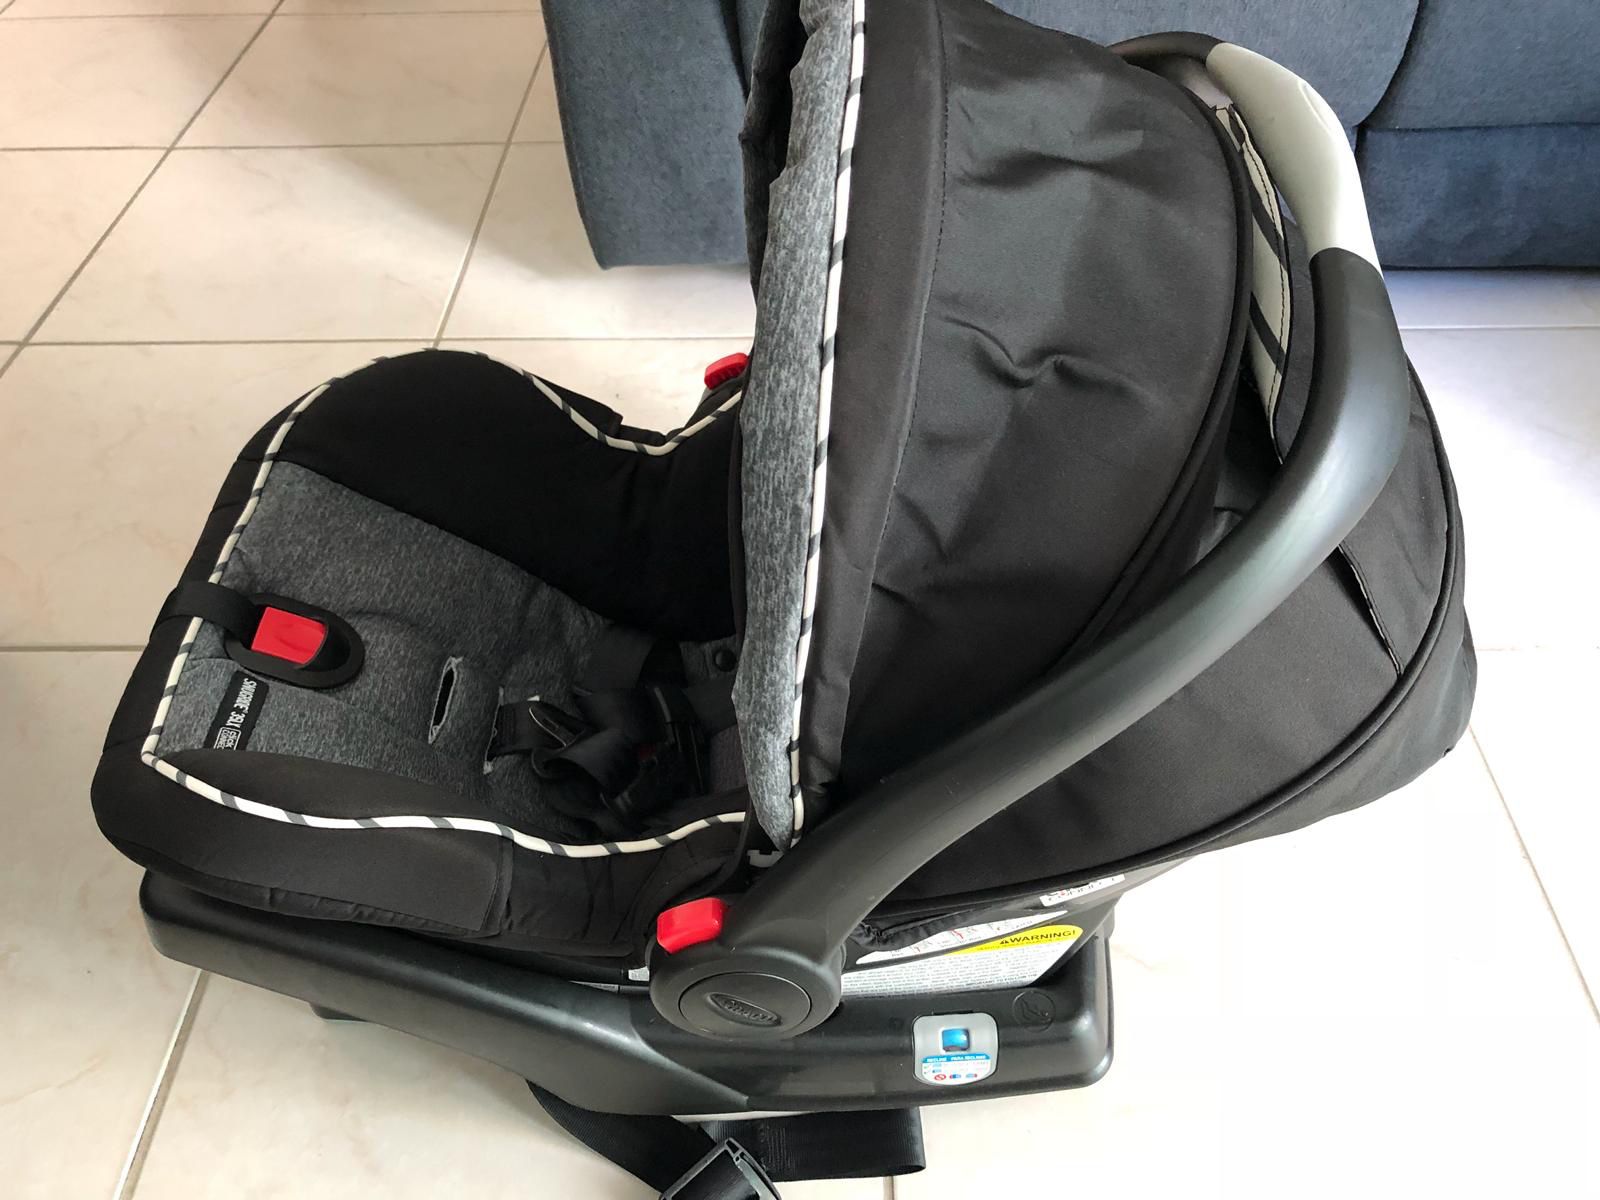 Graco SNUGRIDE 35LX clickConnect Car seat